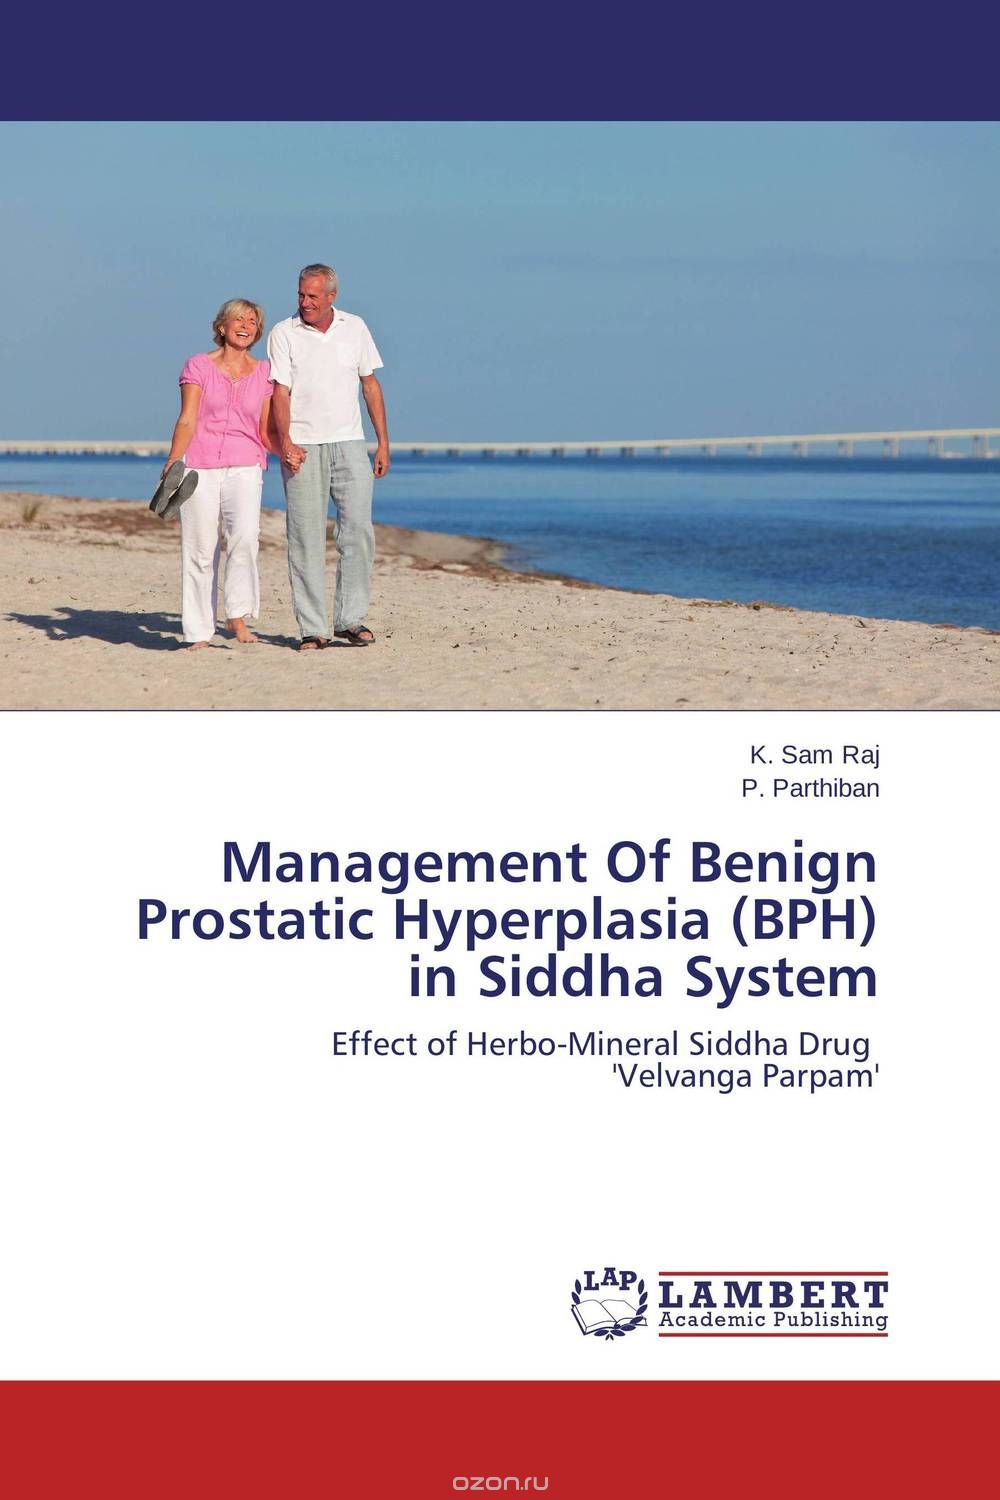 Скачать книгу "Management Of Benign Prostatic Hyperplasia (BPH) in Siddha System"